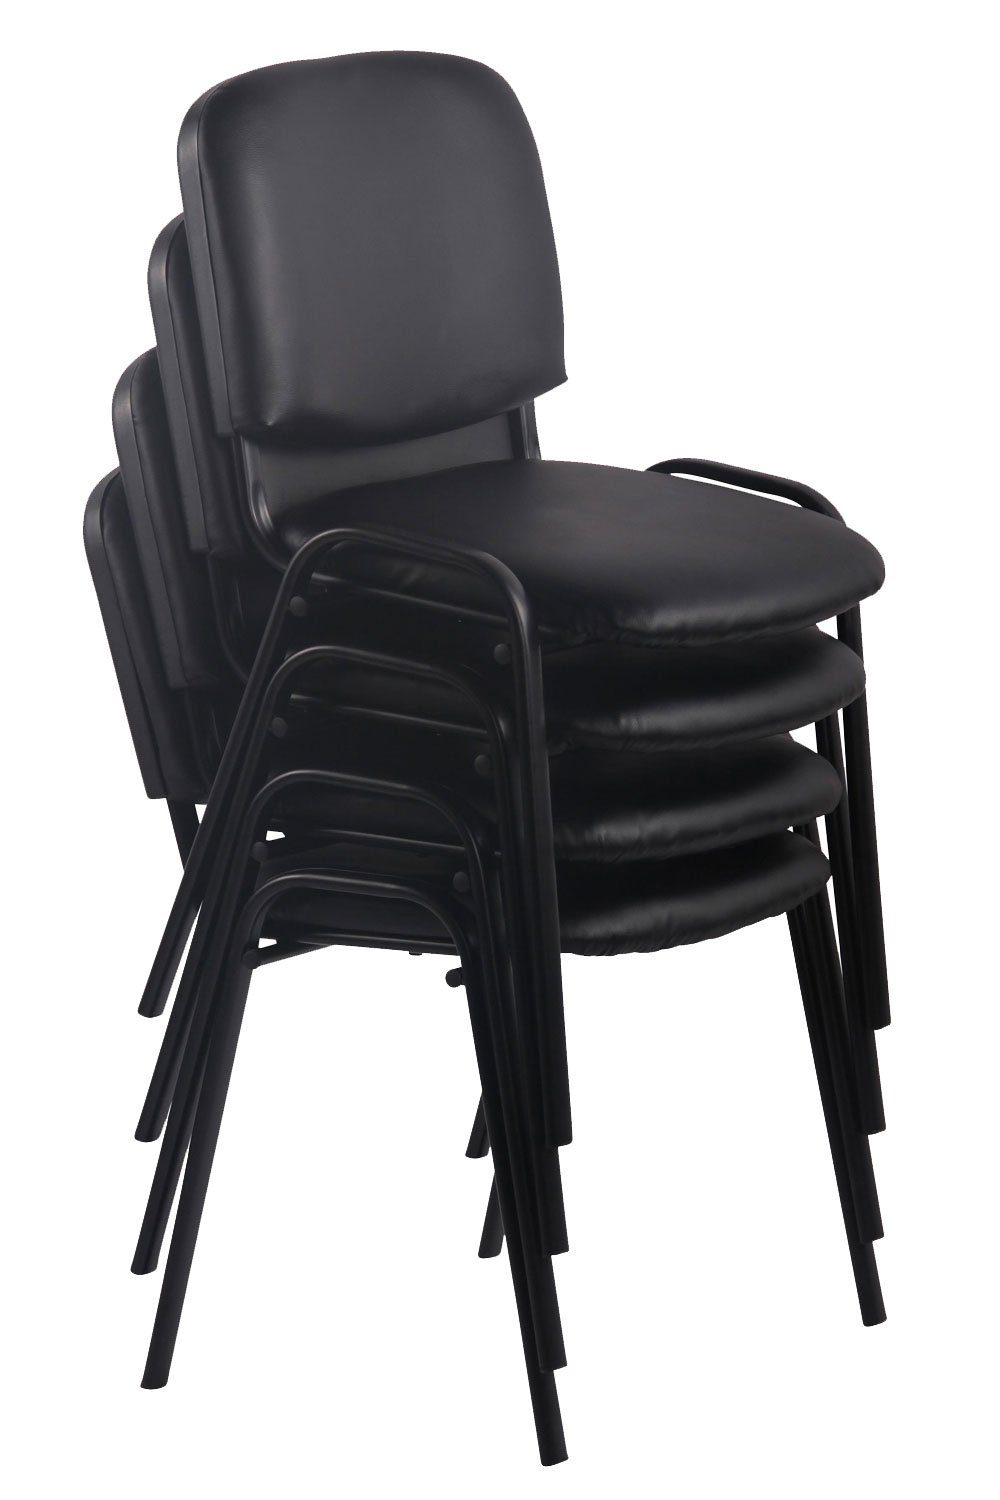 St), - Keen Metall 4 Gestell: - matt (Besprechungsstuhl Sitzfläche: Besucherstuhl Kunstleder rot hochwertiger - TPFLiving Polsterung Messestuhl, mit Konferenzstuhl Warteraumstuhl - schwarz